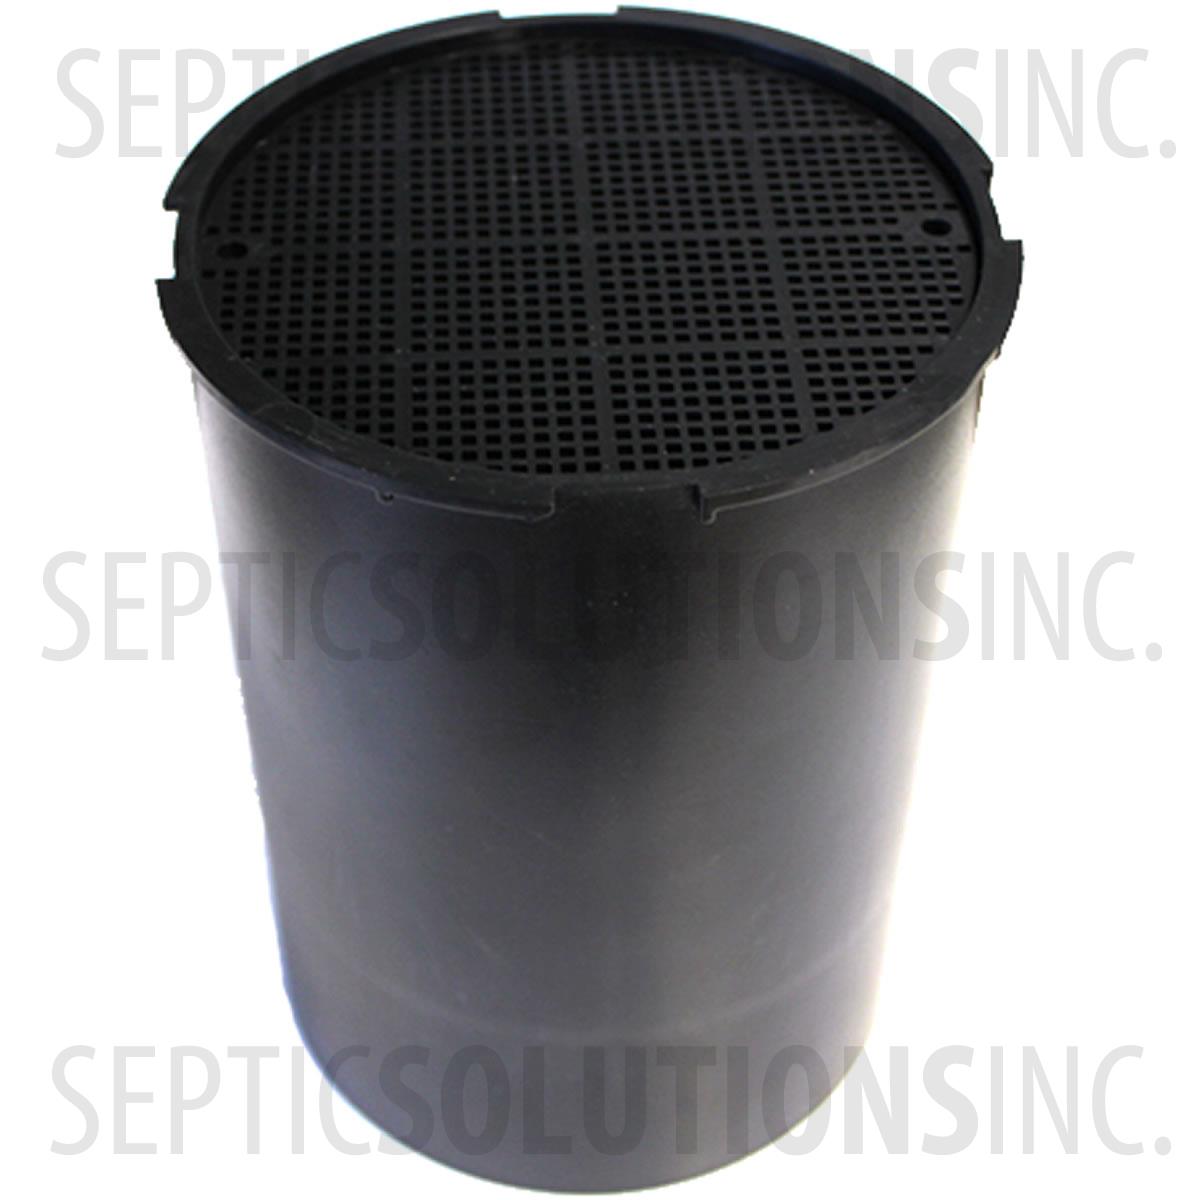 Septic tank carbon filter